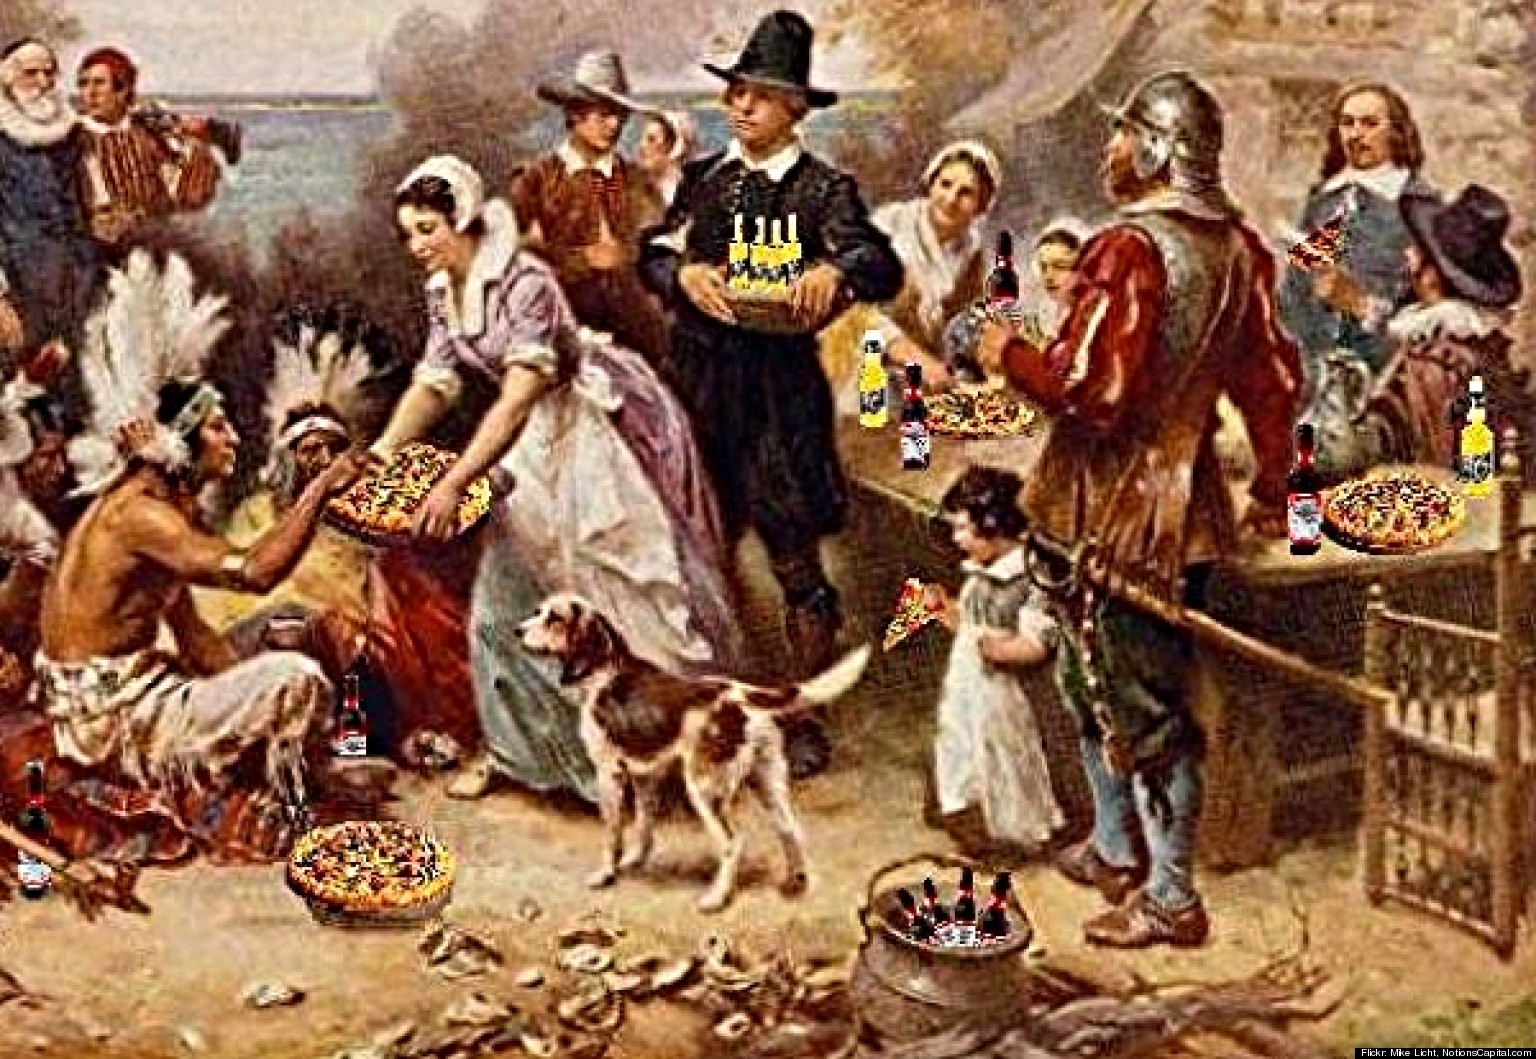 historia de thanksgiving